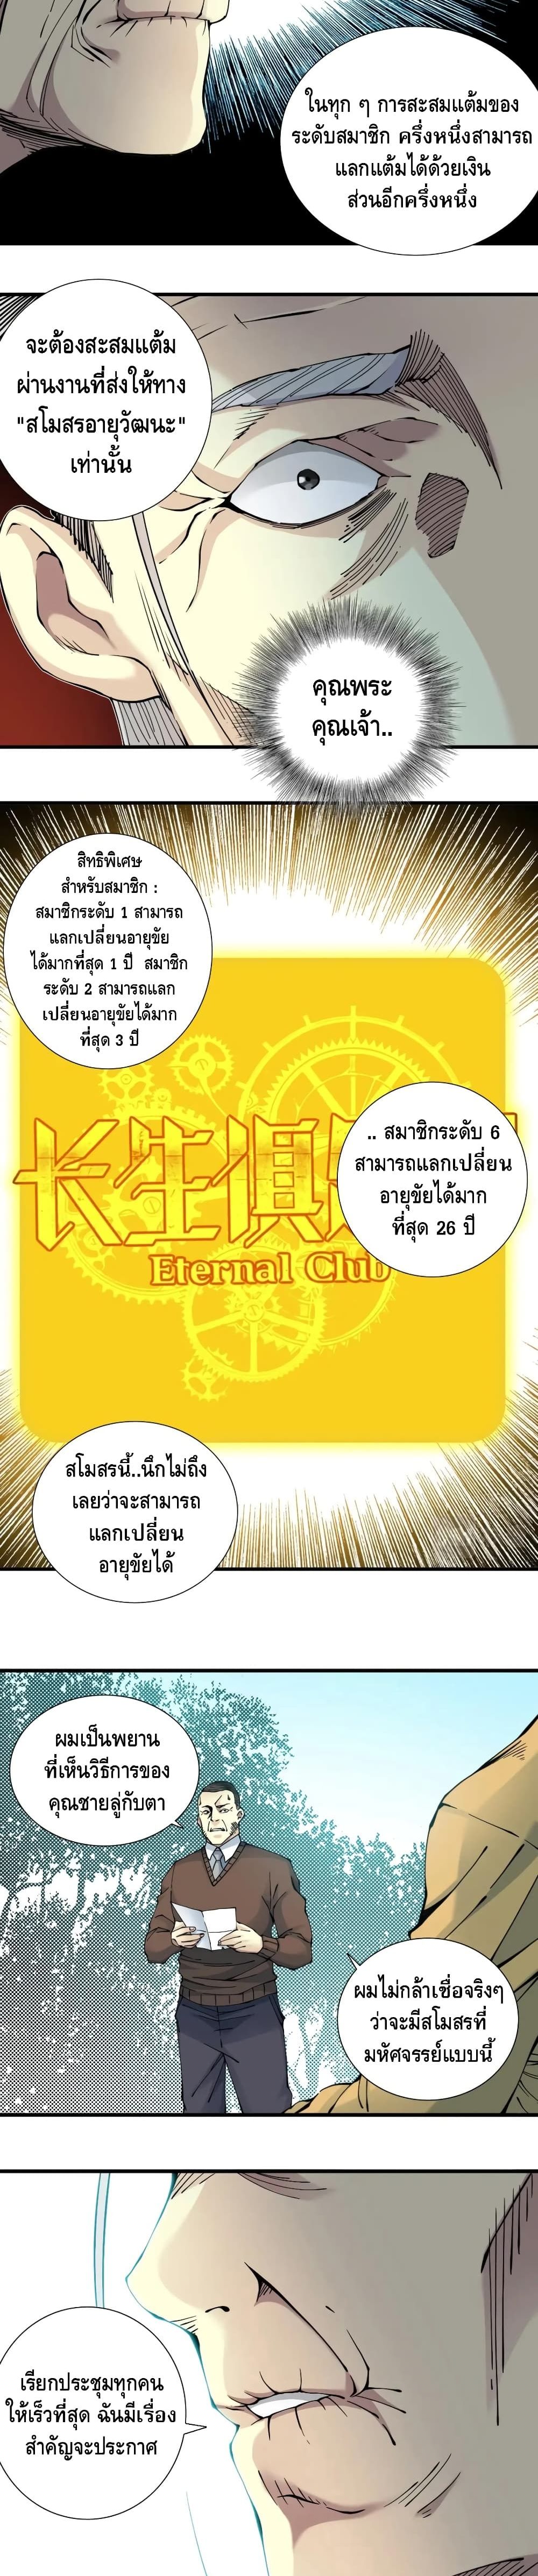 The Eternal Club 12-12